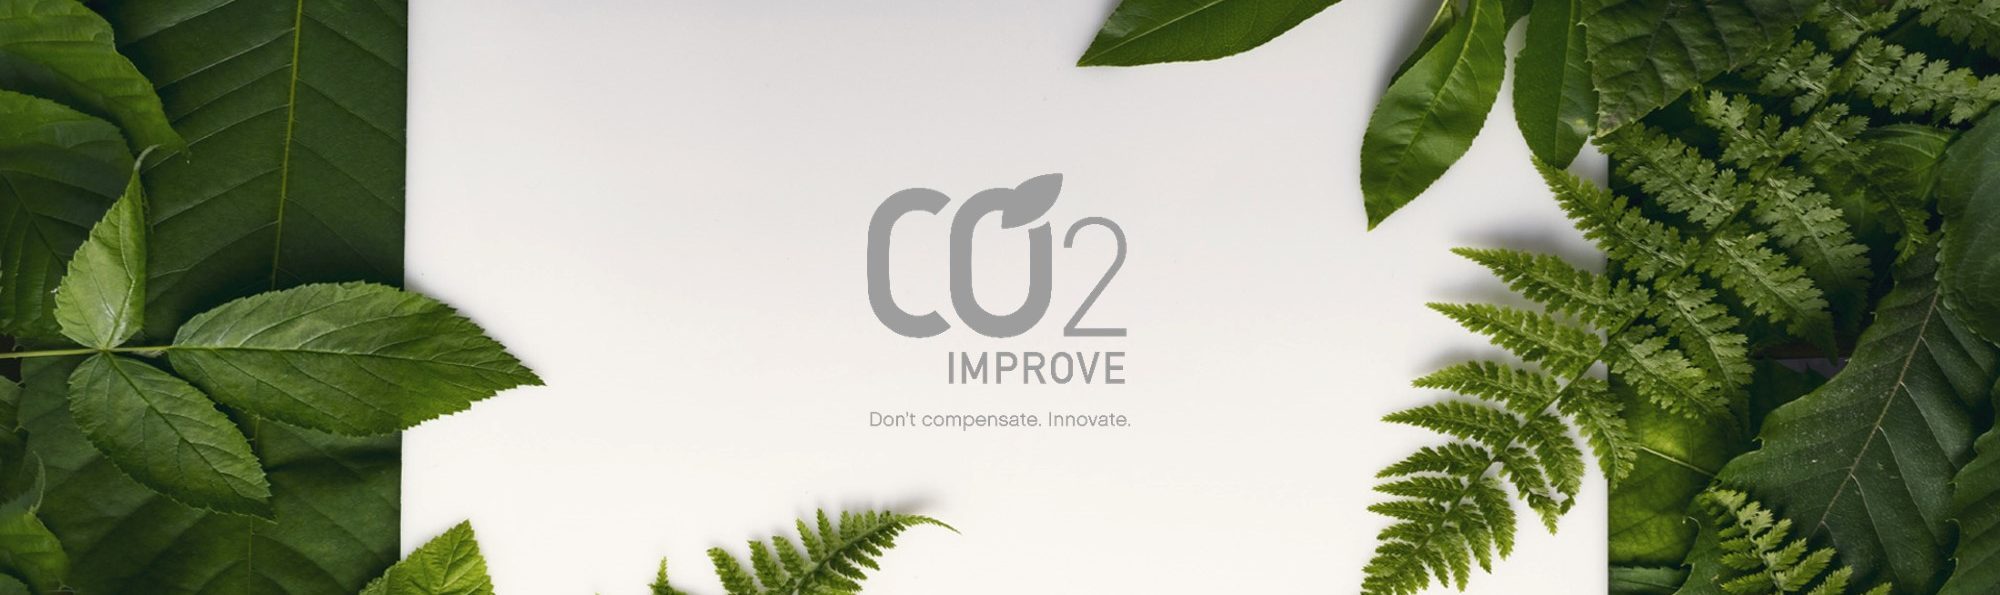 CO2 Improve bild 1